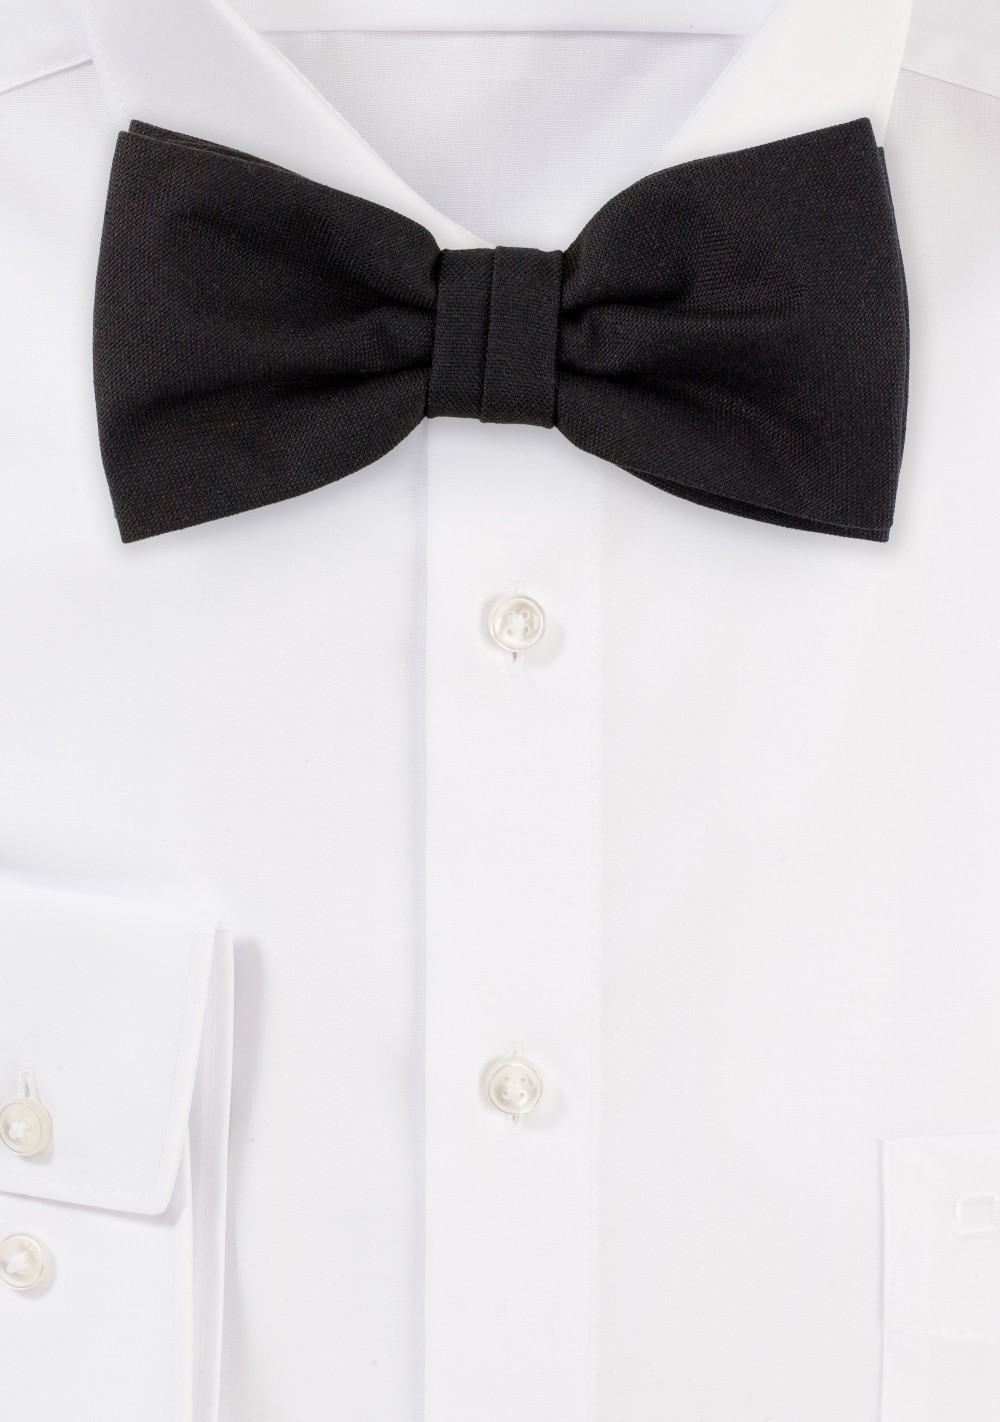 Matte Black Solid Color Bow Tie